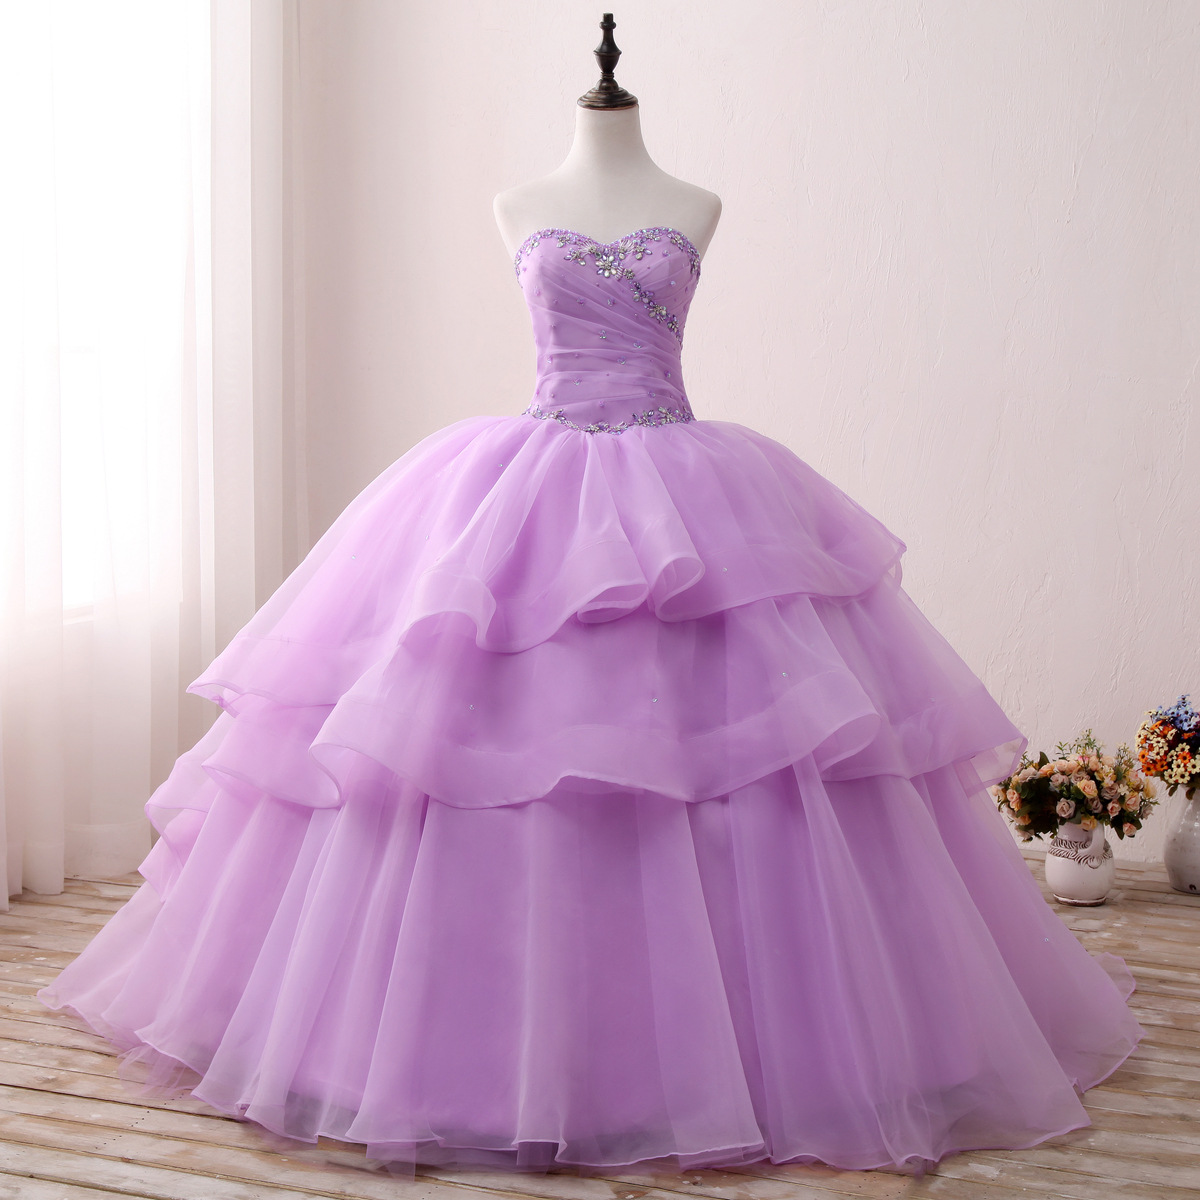 Bride Wedding Dress Multi-layer Lace Tutu Skirt Kpw0069